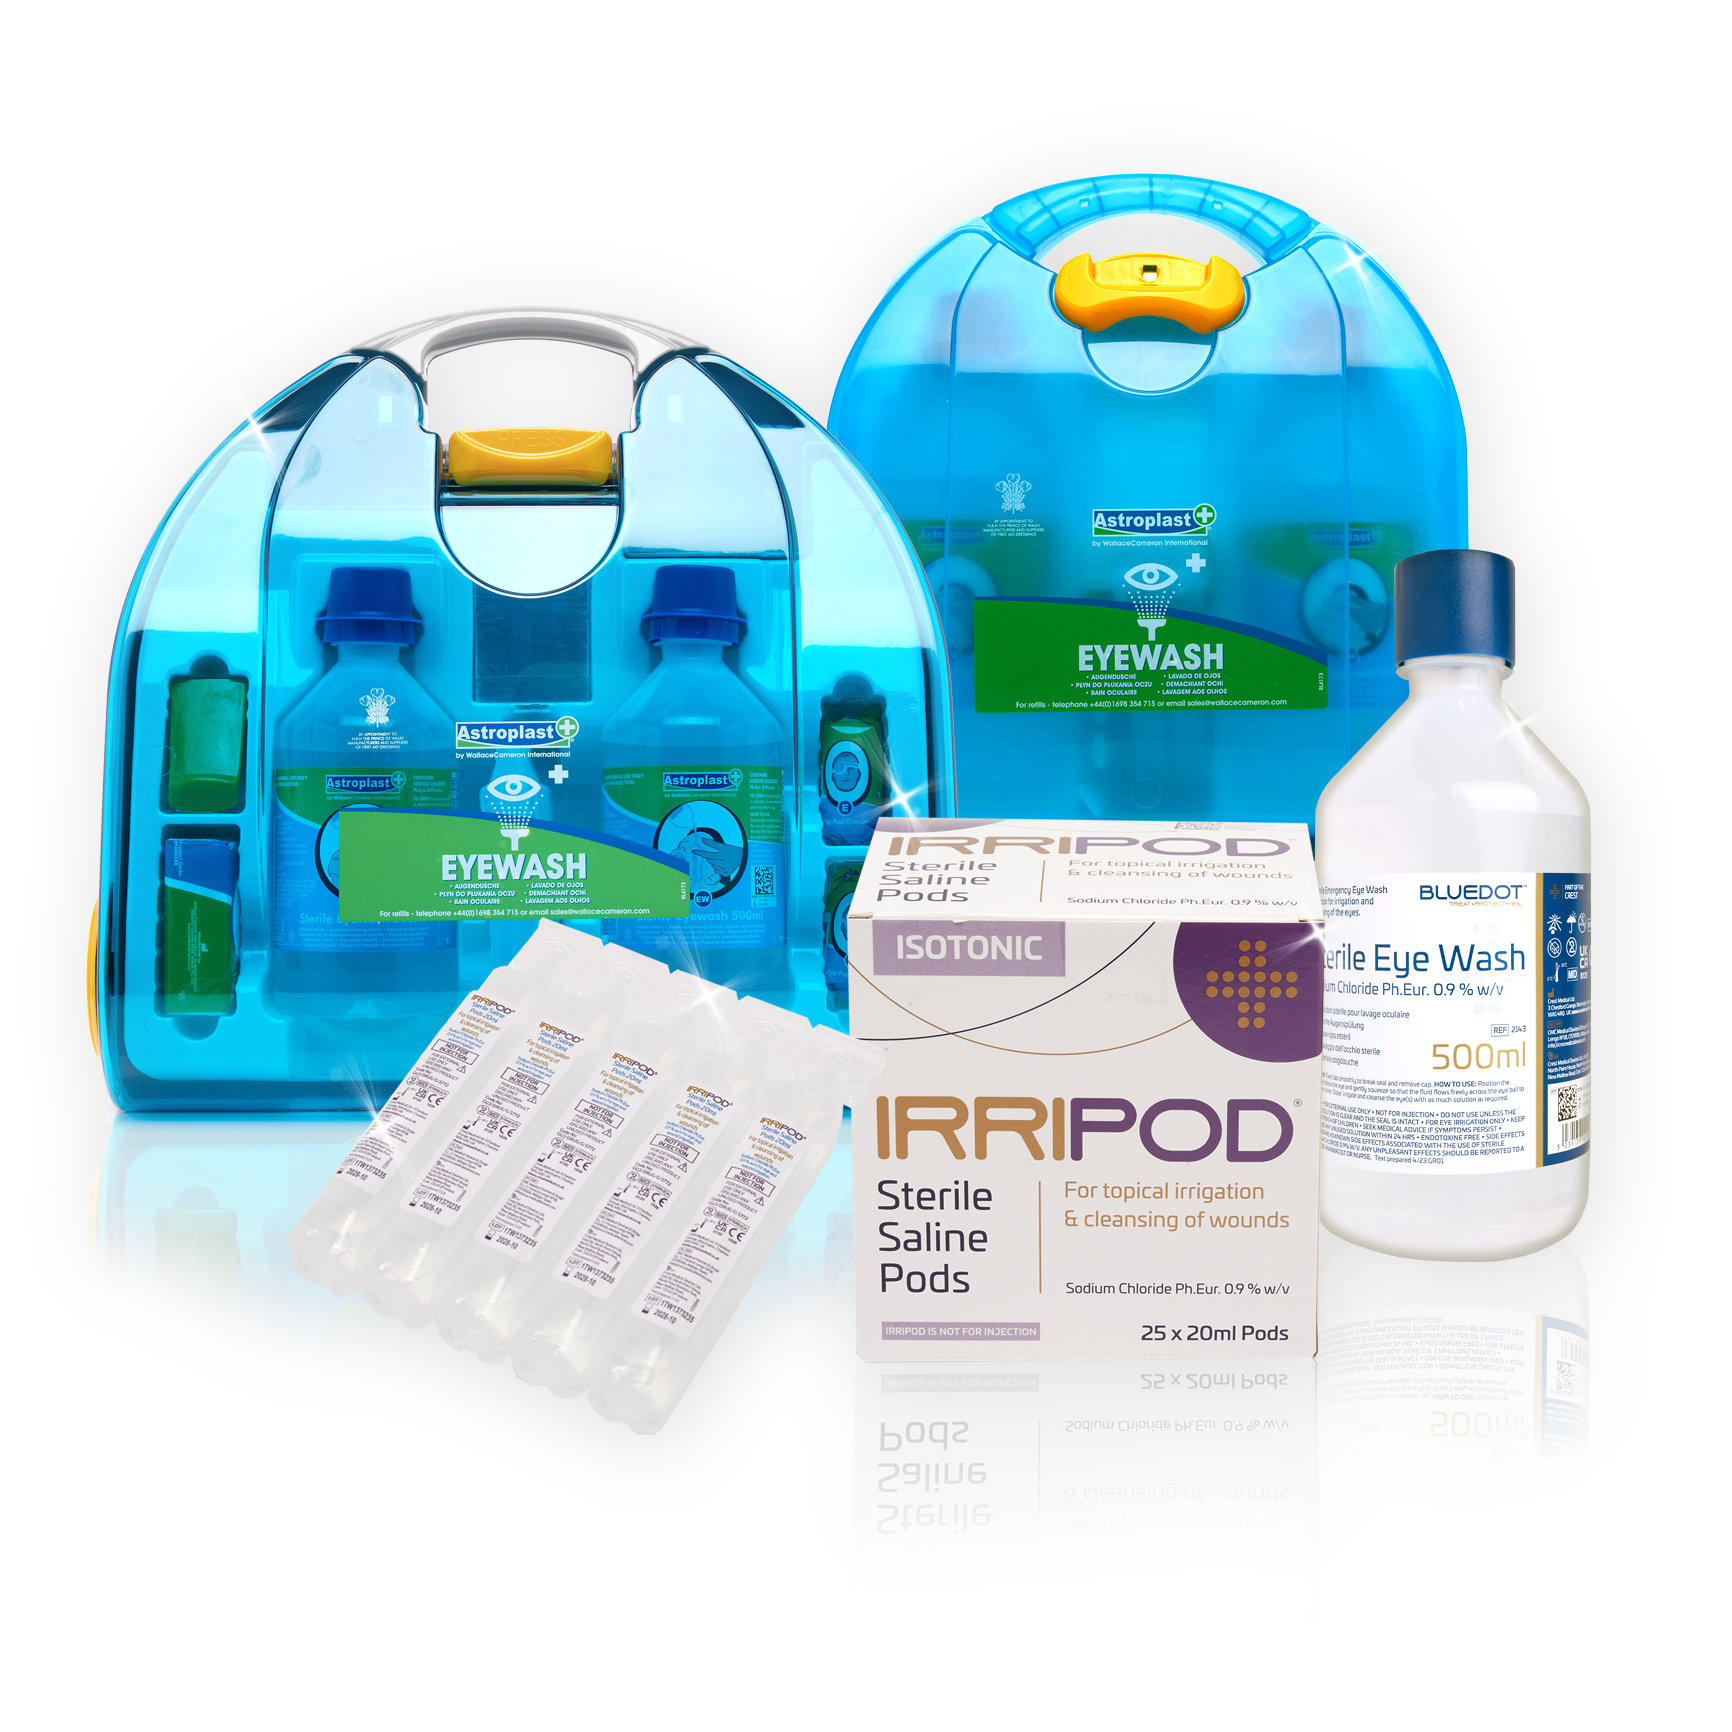 Eye First aid kits